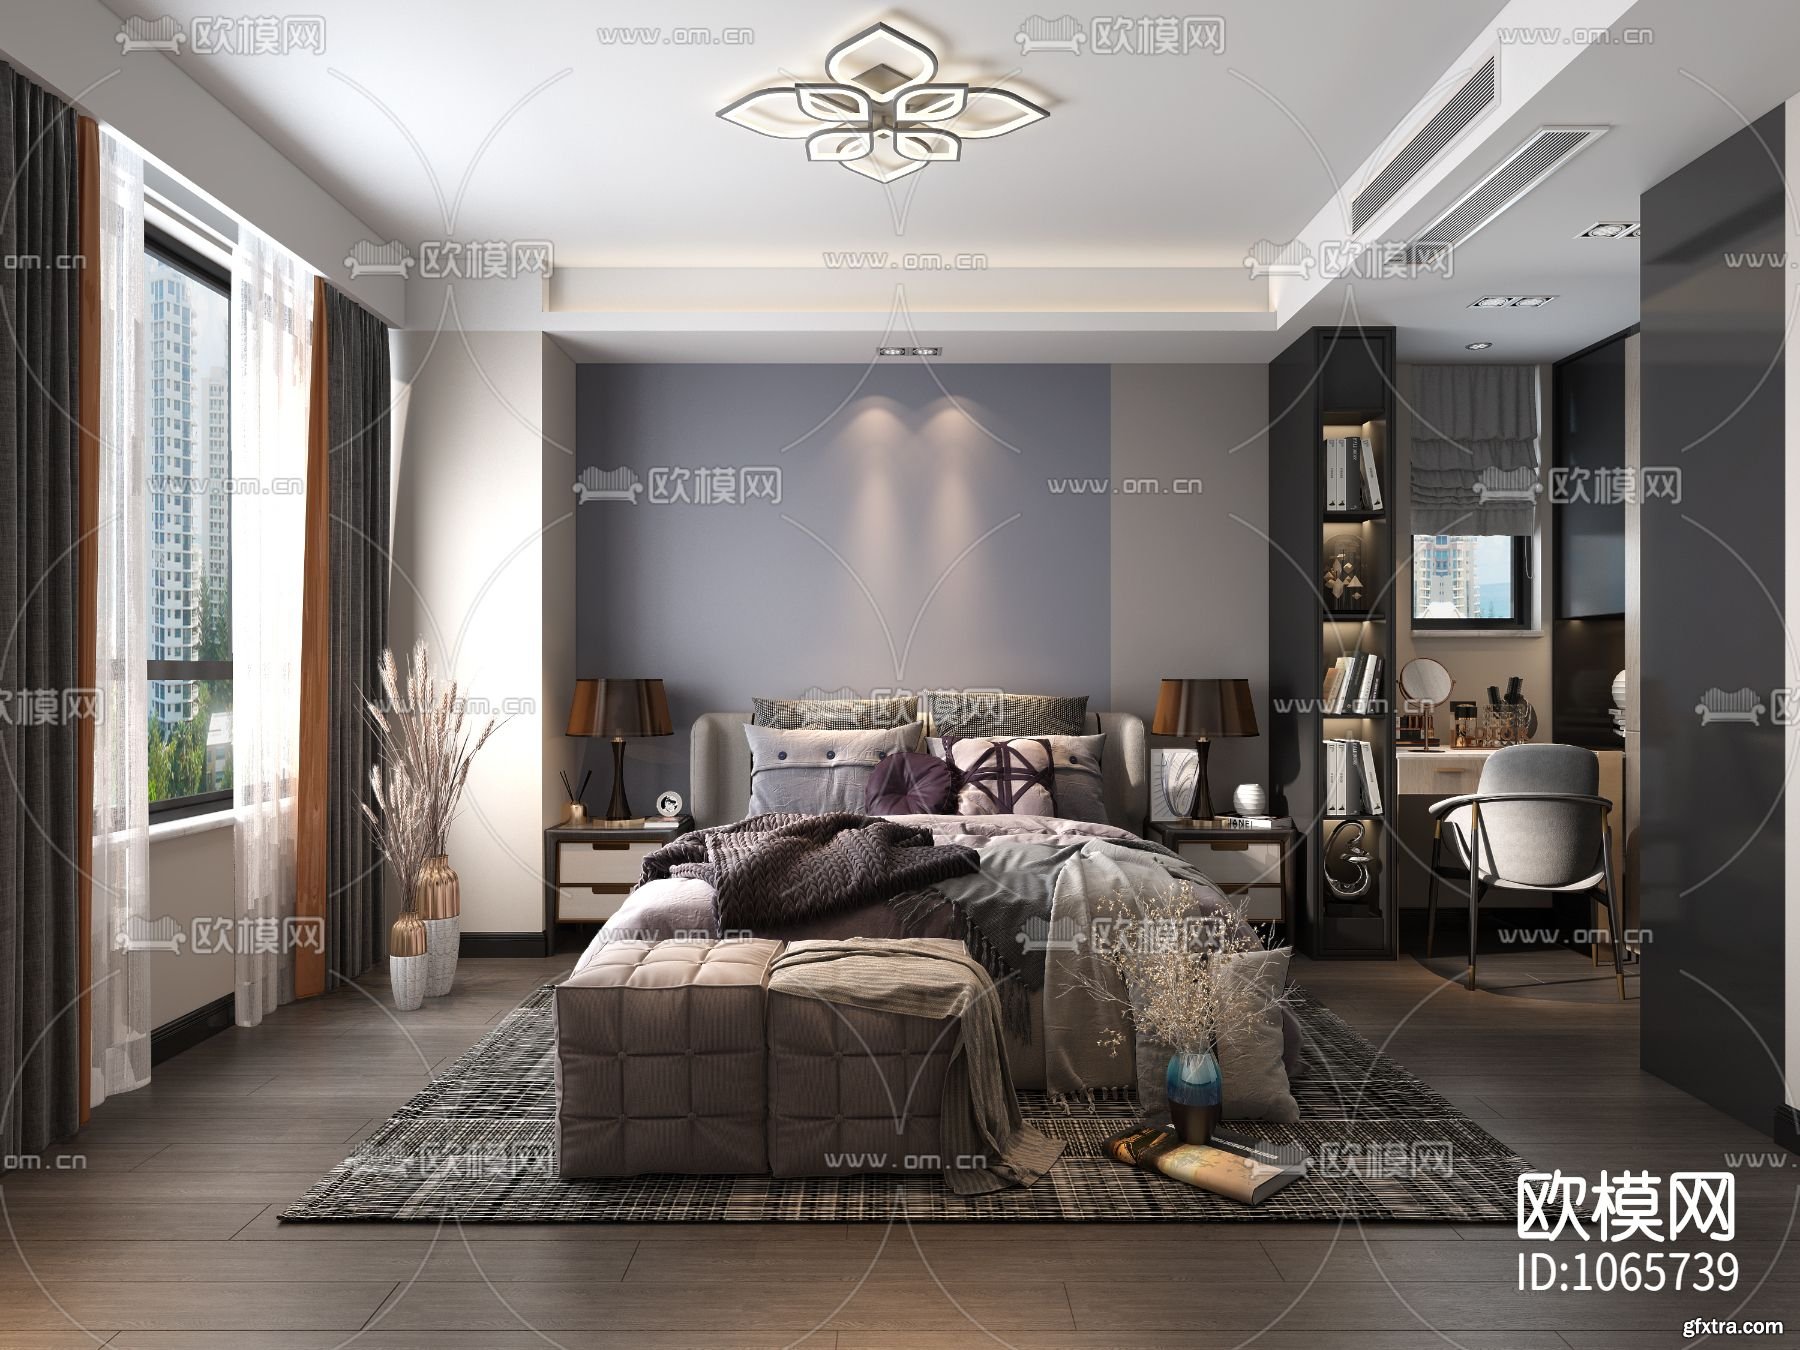 Modern Style Bedroom 303 » GFxtra